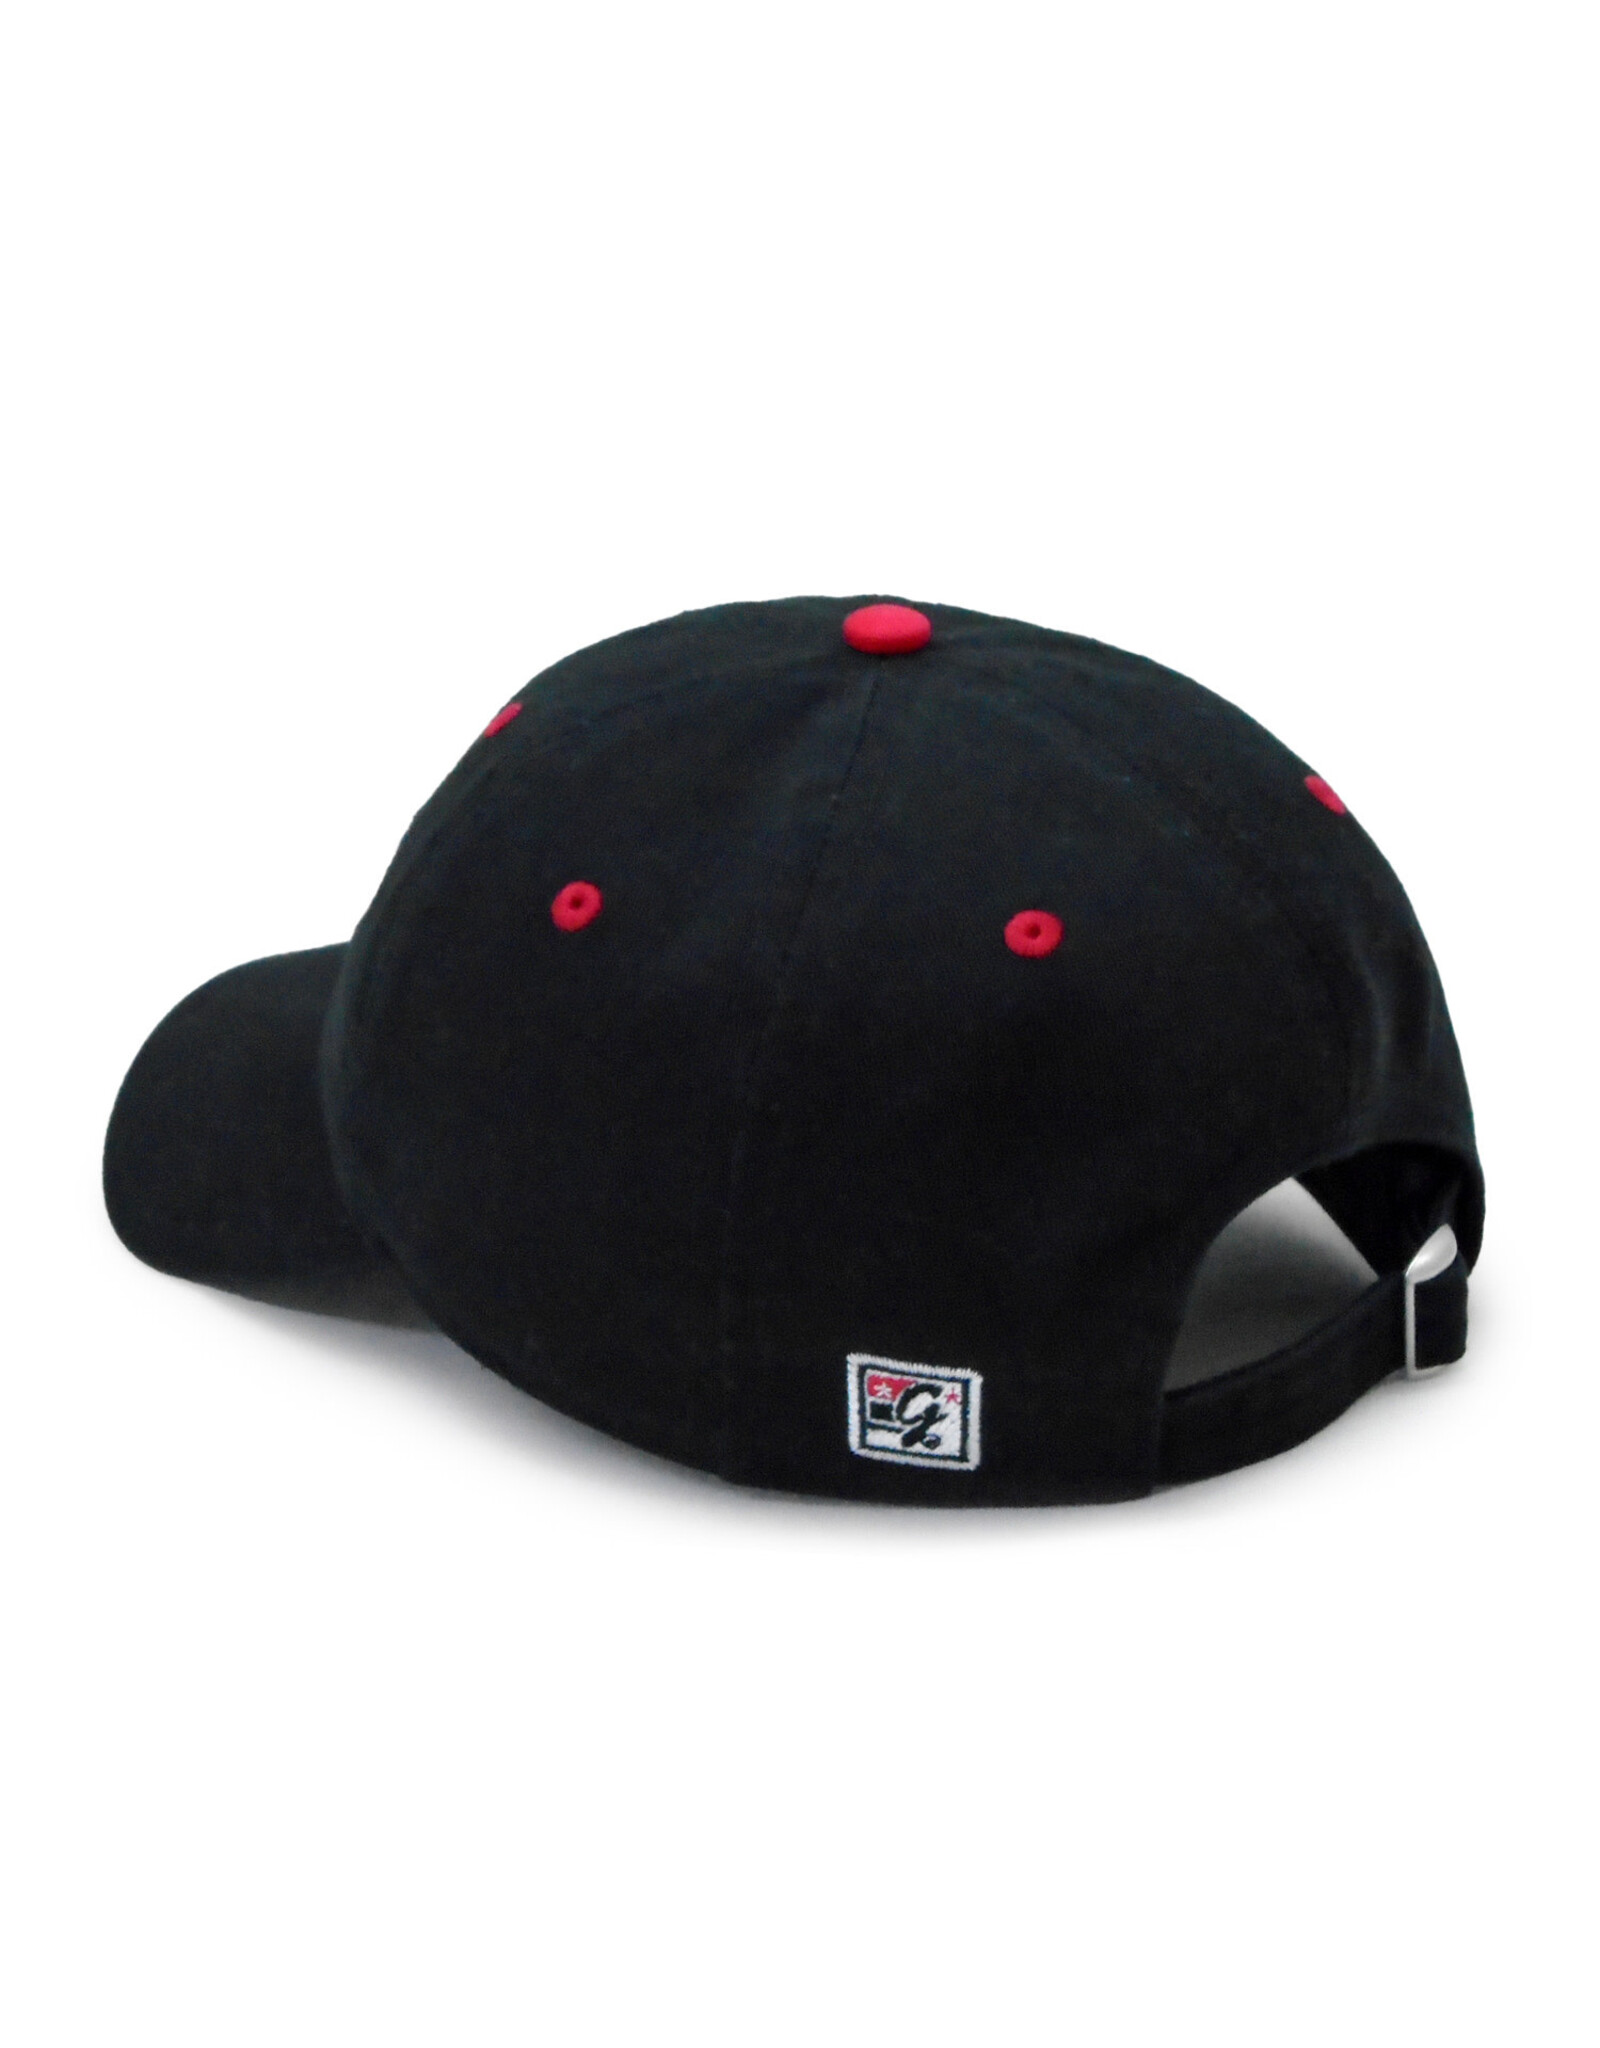 Pittsburgh Pirates CC # Game Used Black Hat 6.875 DP22692